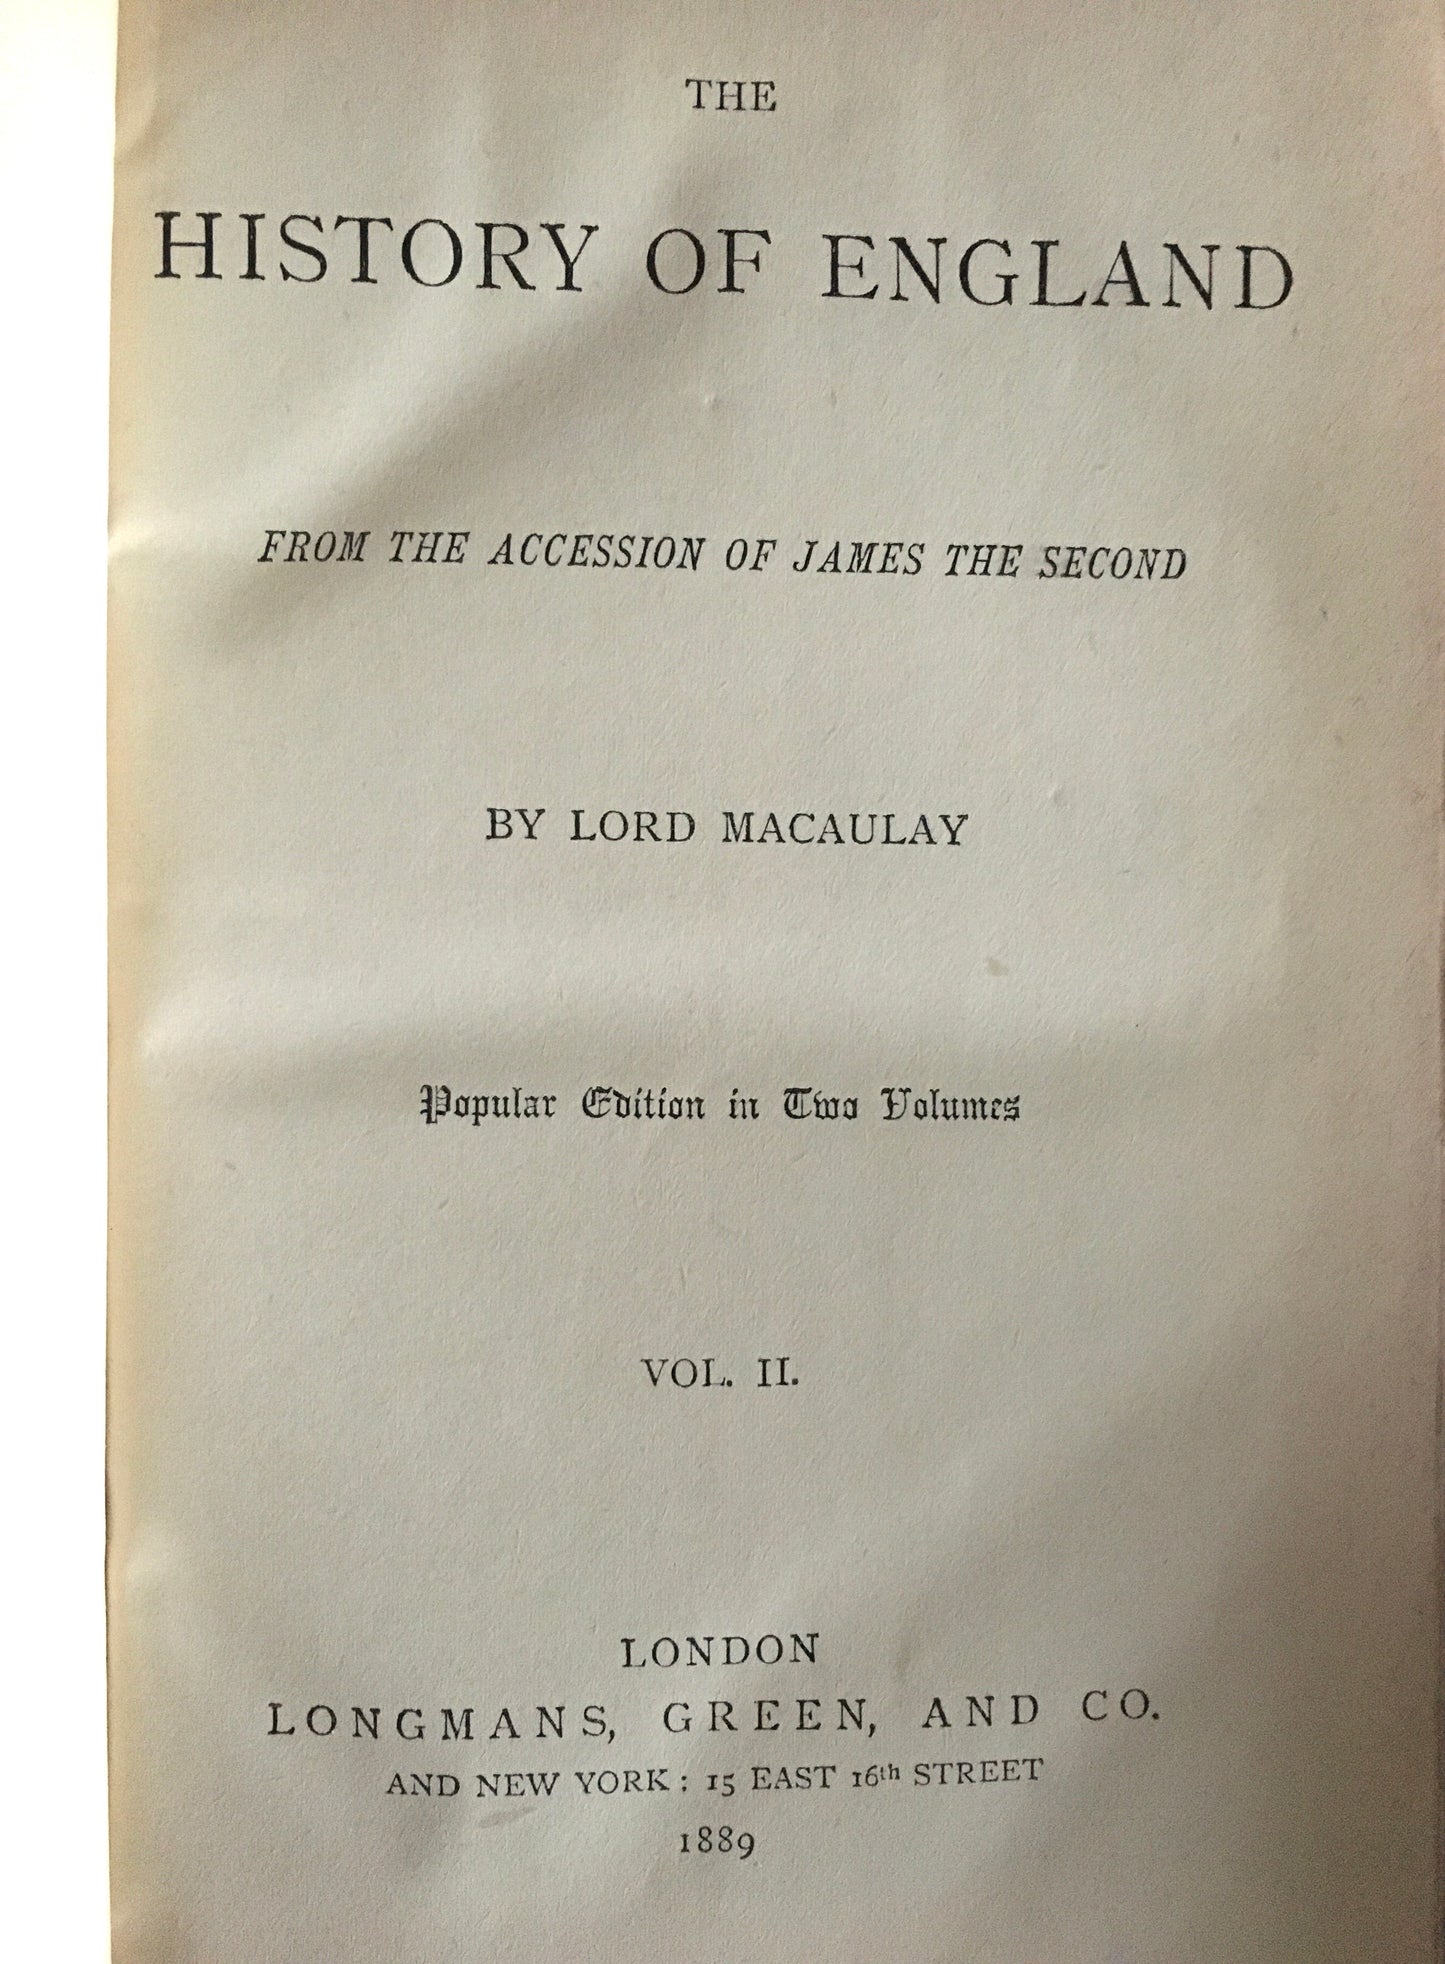 History of England Vol II